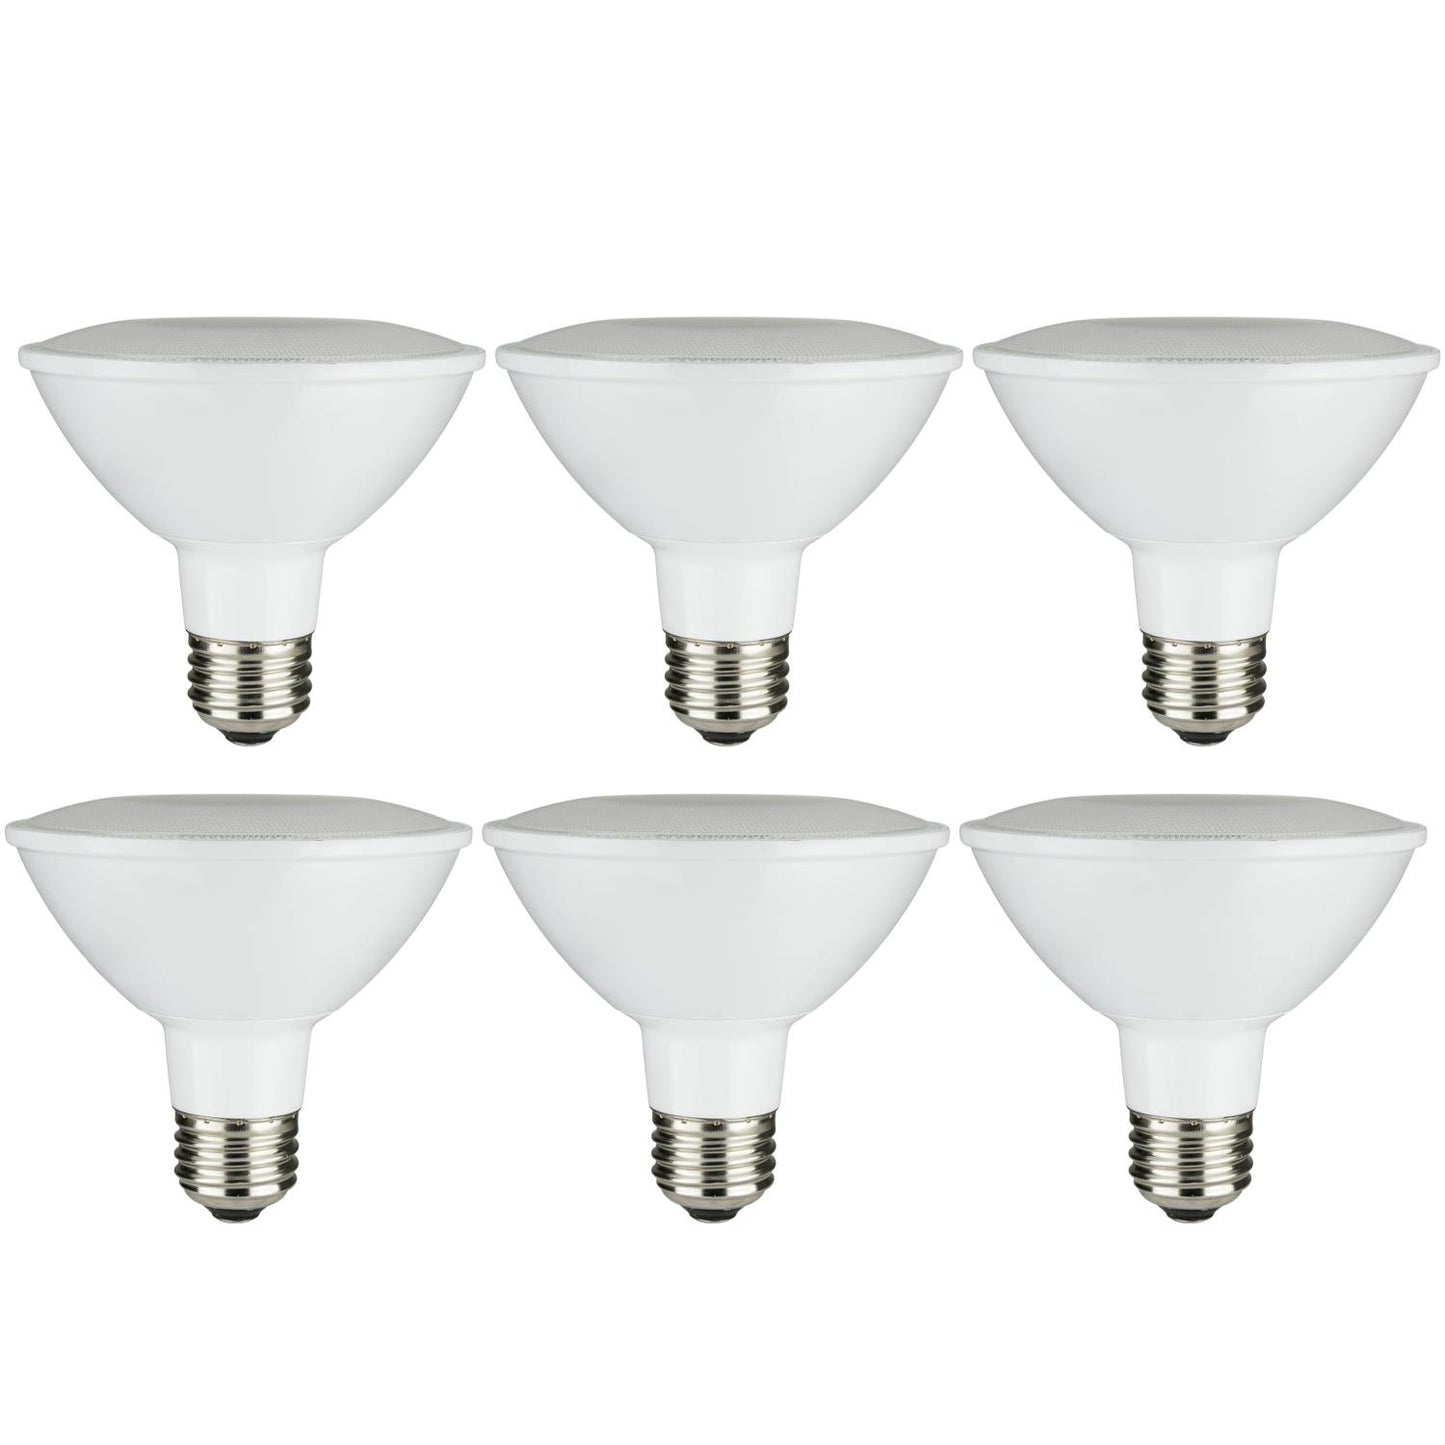 Sunlite LED PAR30 Reflector HE Series 10.5W (60W Equivalent) Light Bulb Medium (E26) Base, Cool White